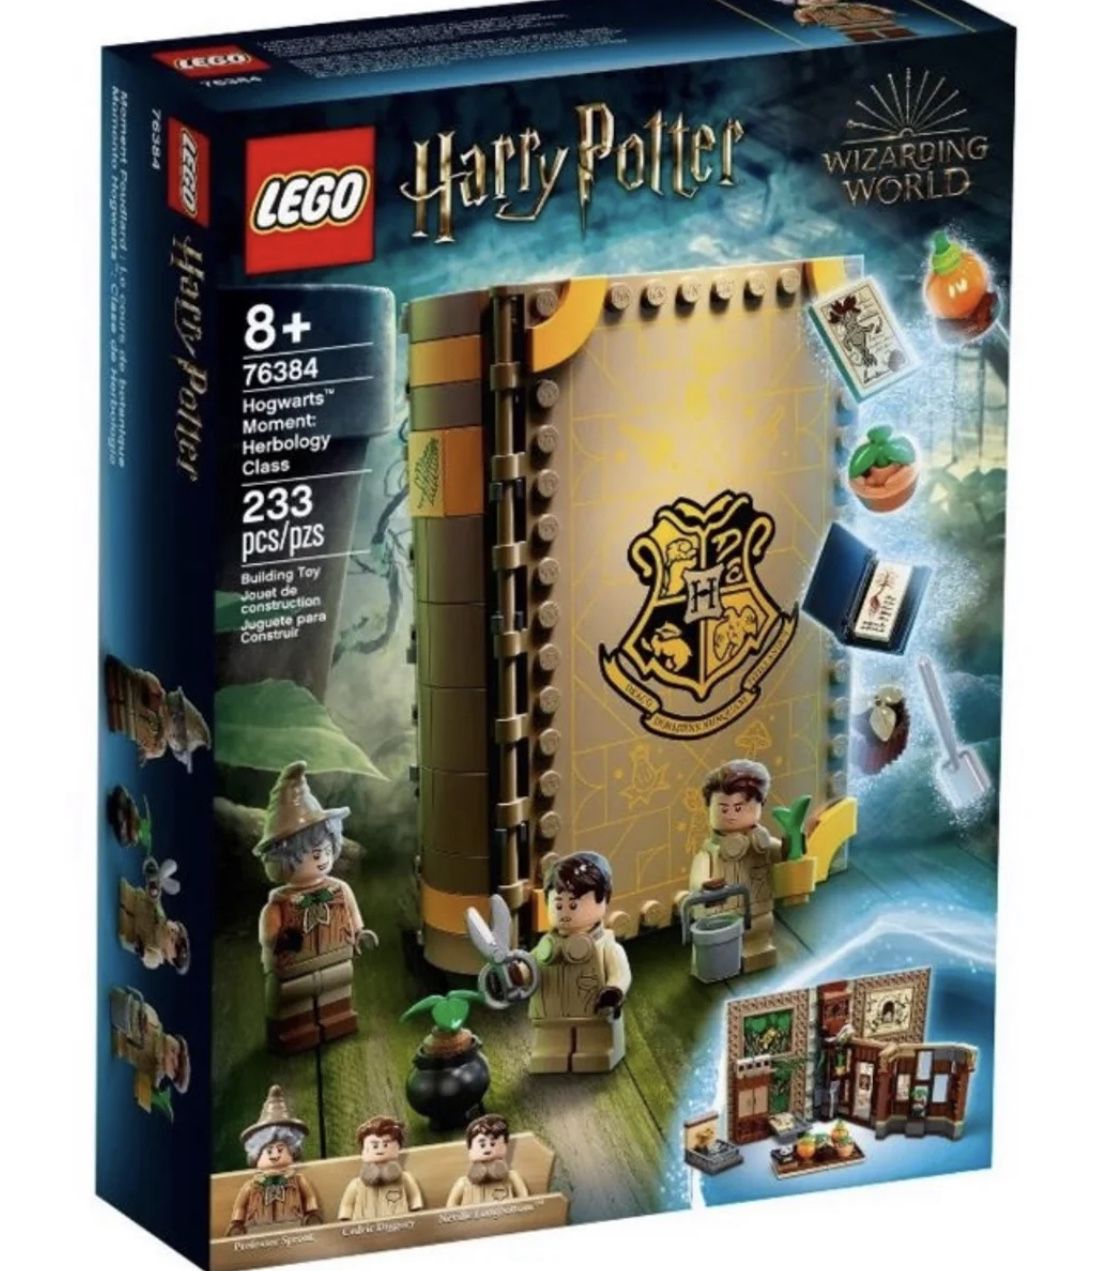 LEGO Harry Potter Hogwarts Moment: Herbology Class 76384 LEGO Brick Book Playset (232 pieces)